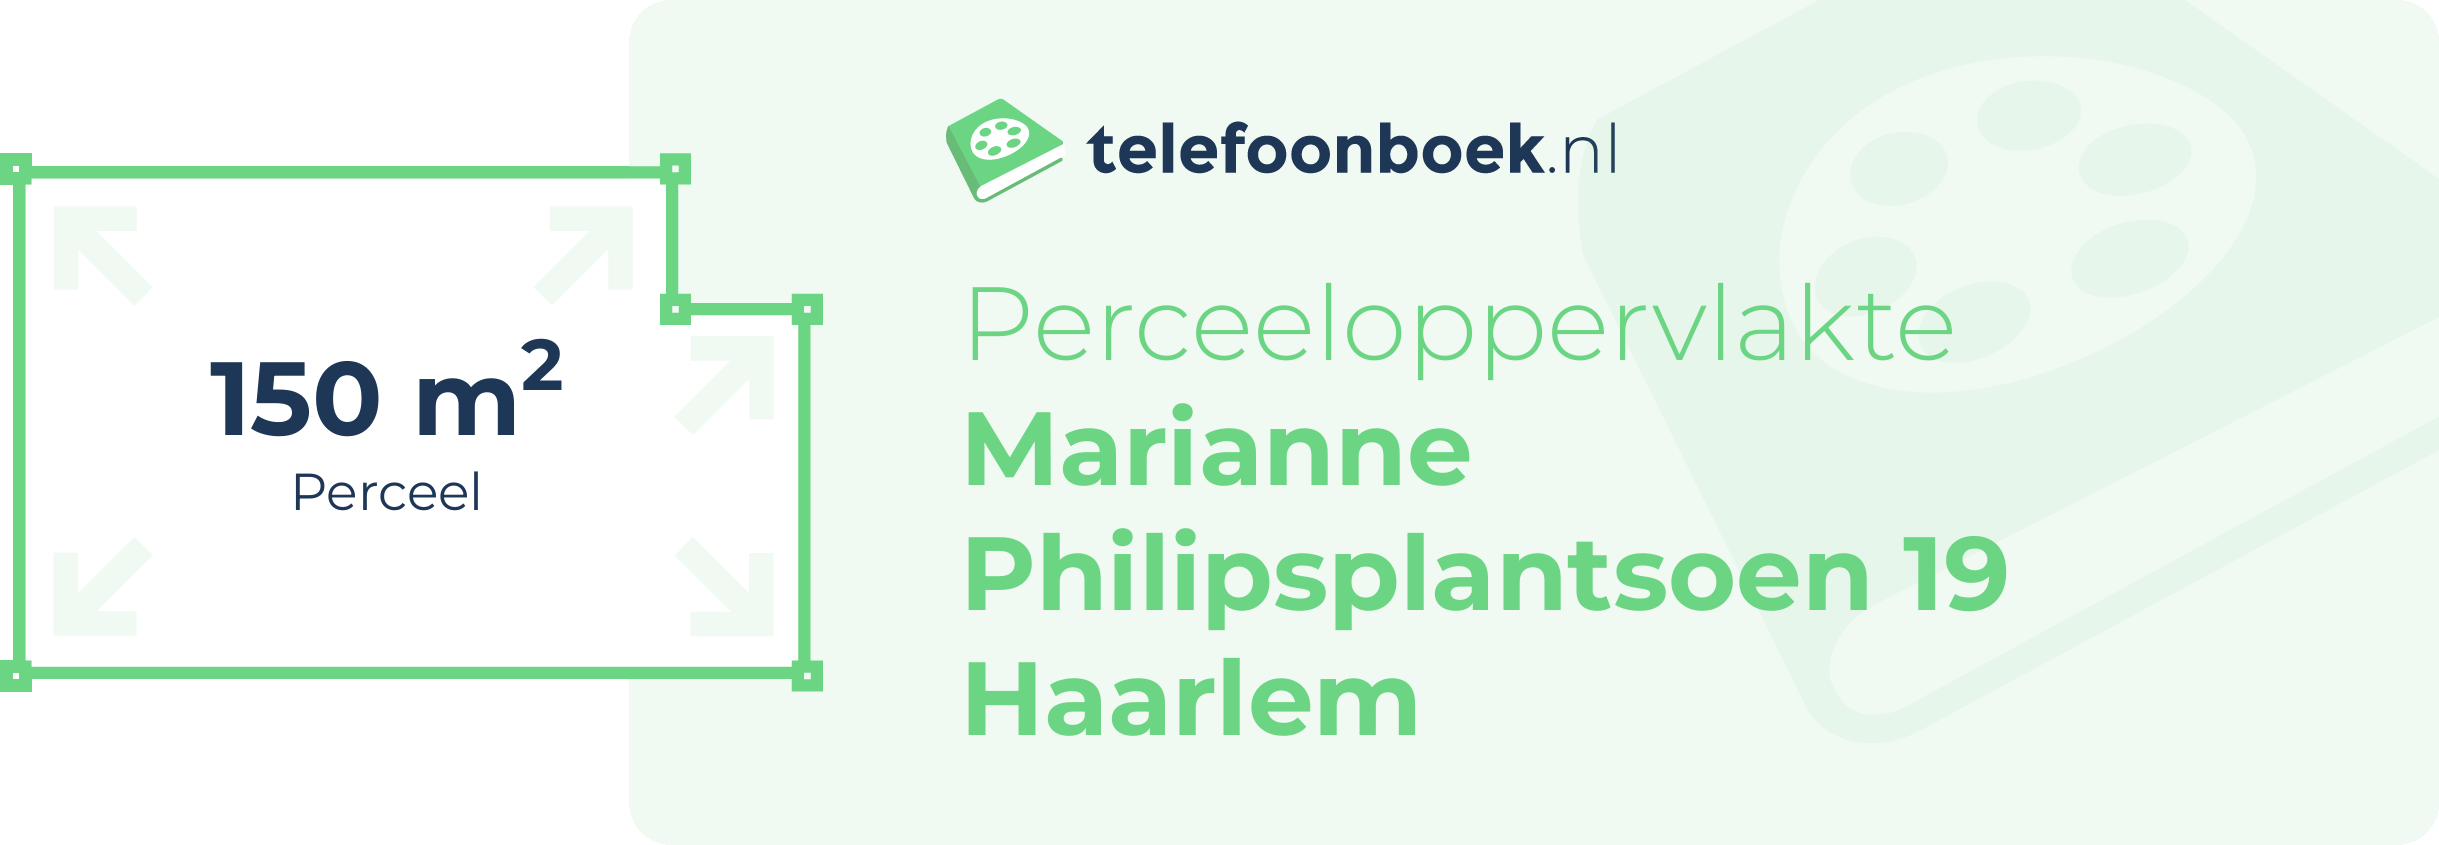 Perceeloppervlakte Marianne Philipsplantsoen 19 Haarlem